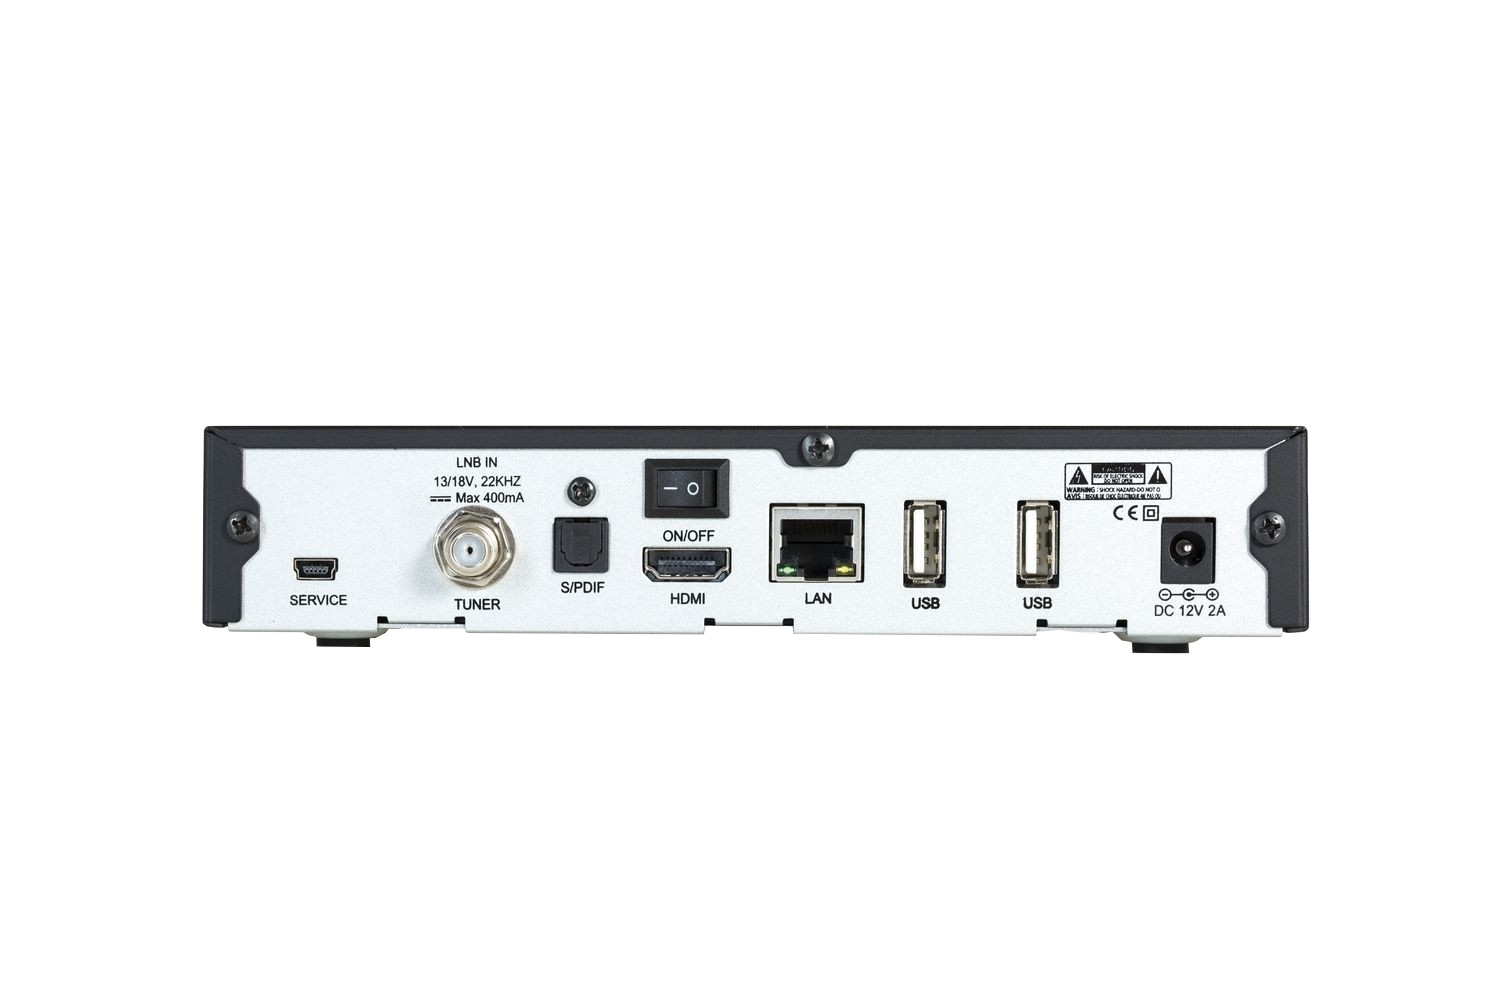  Dreambox DM520 HD 1x DVB-S2 Tuner PVR ready Full HD 1080p H.265 Linux Receiver 